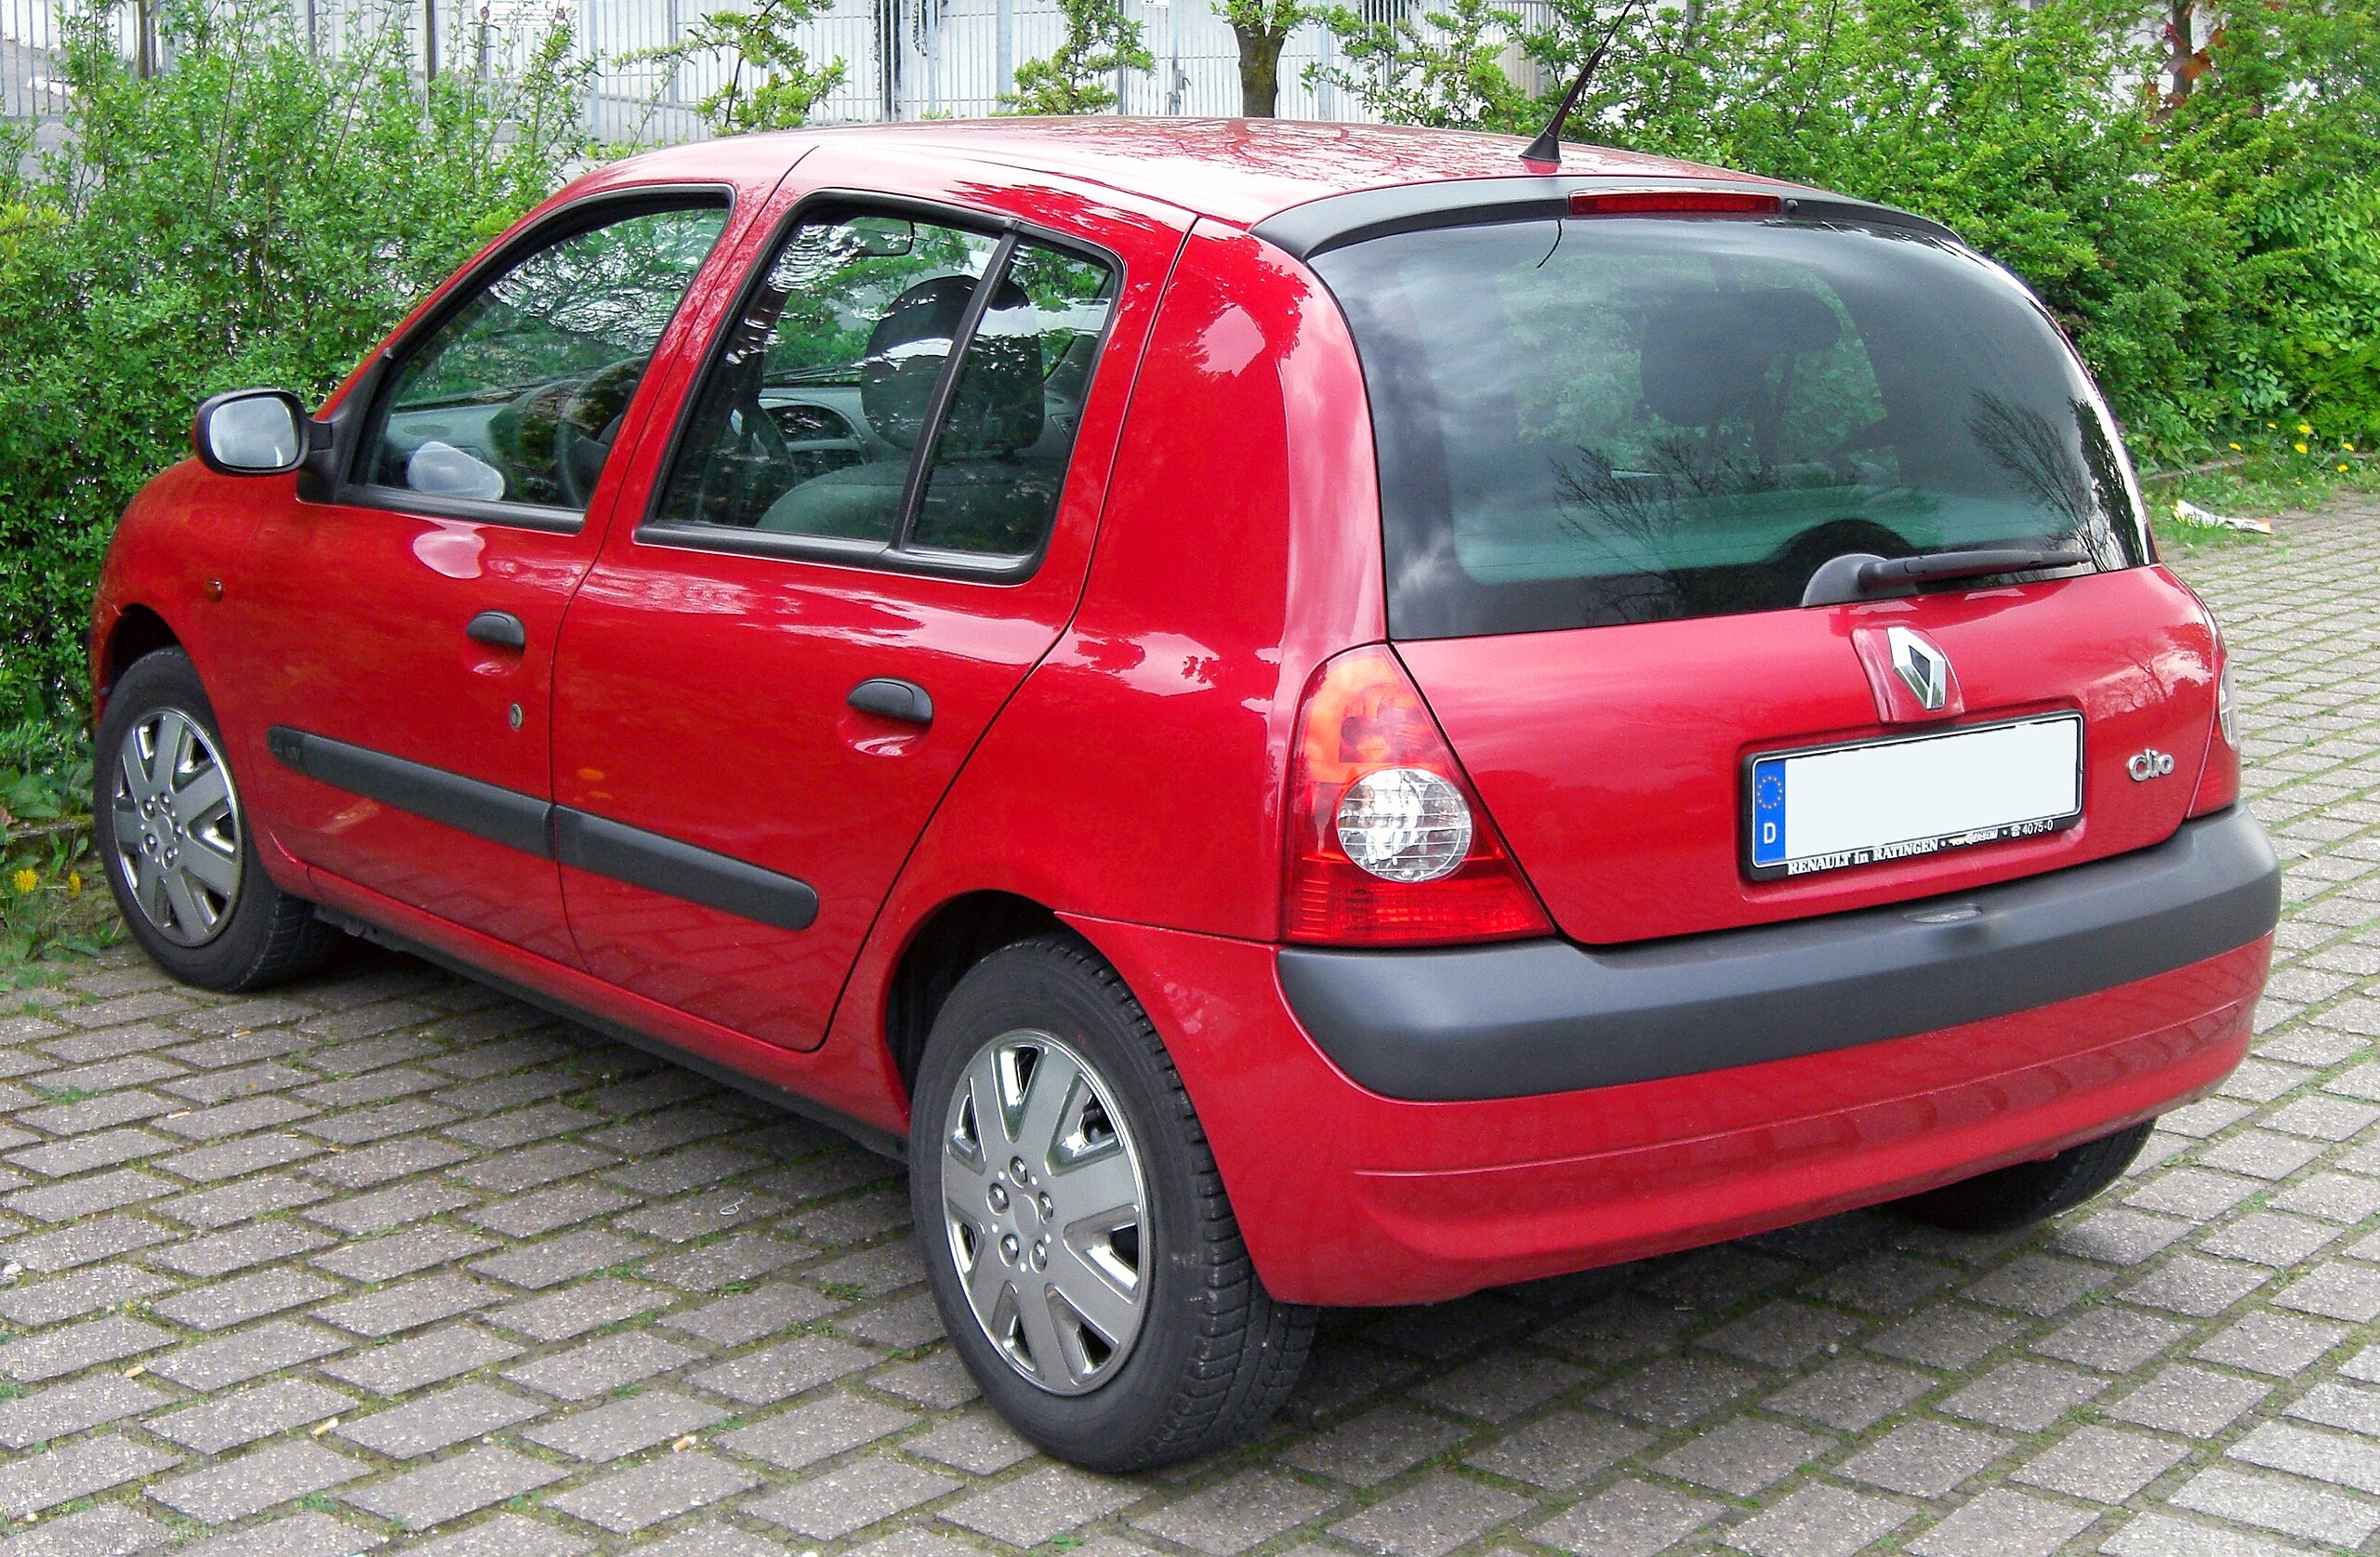 https://upload.wikimedia.org/wikipedia/commons/thumb/4/44/Renault_Clio_II_20090425_rear.JPG/2560px-Renault_Clio_II_20090425_rear.JPG